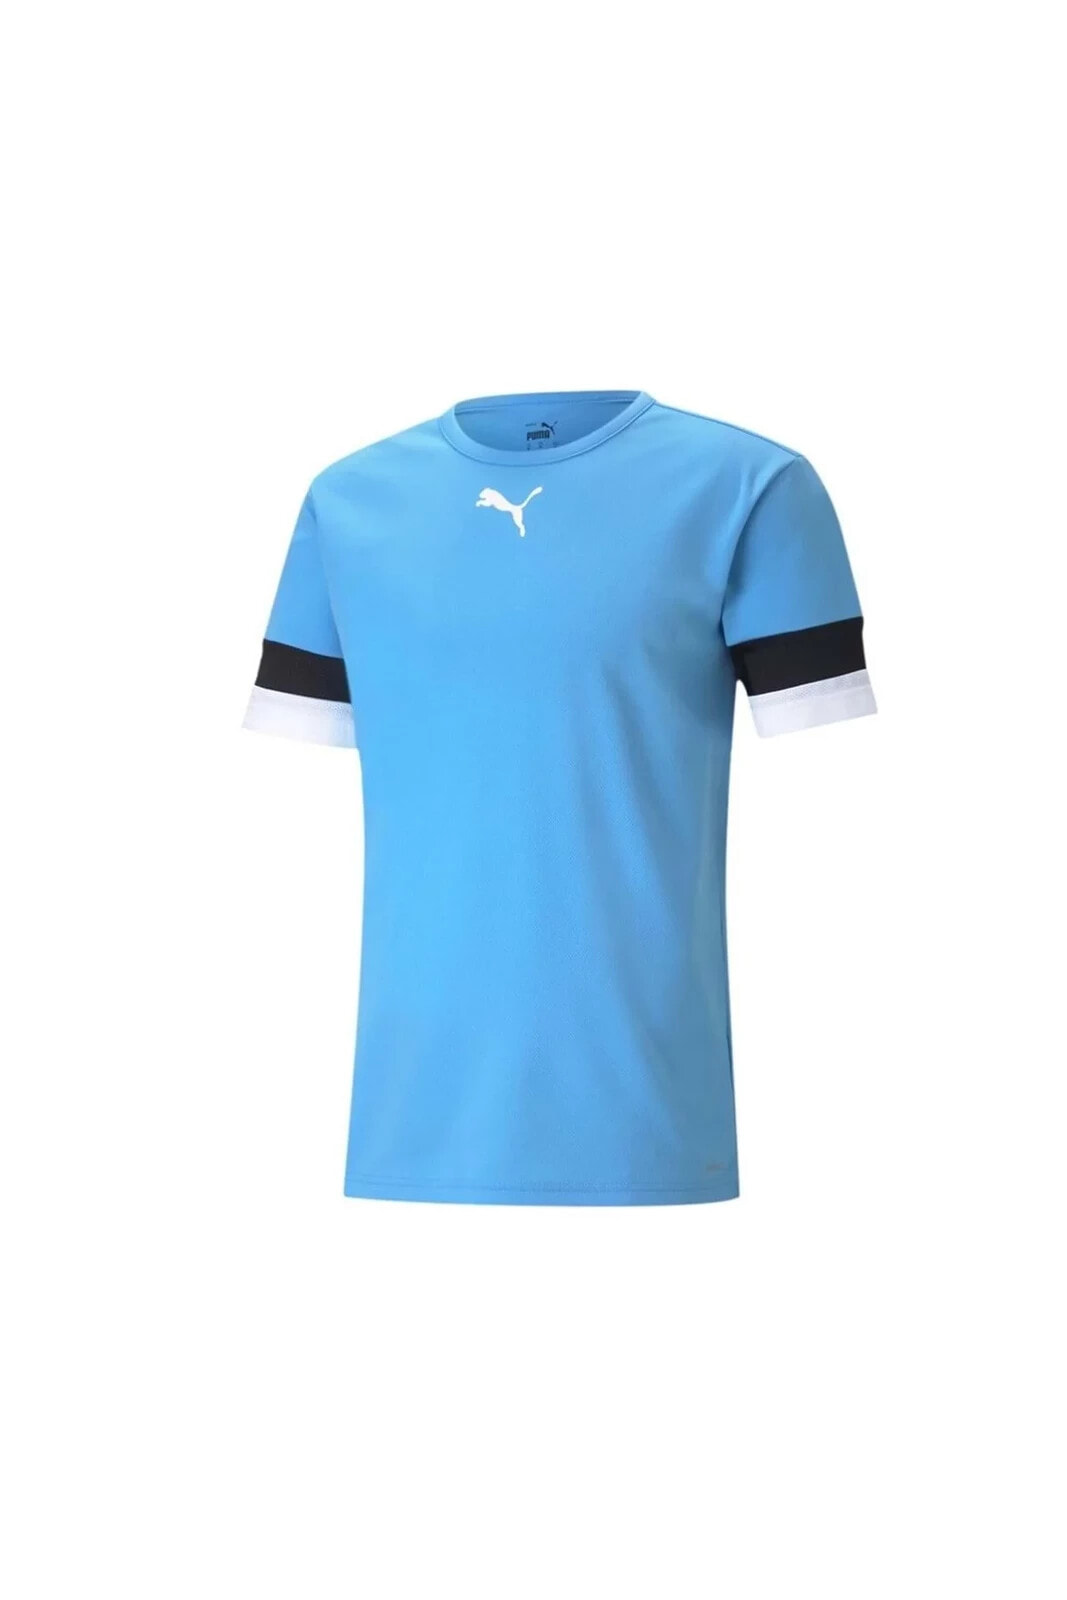 704932 Teamrise Jersey T-shirt Dry-cell Erkek Tişört Mavi